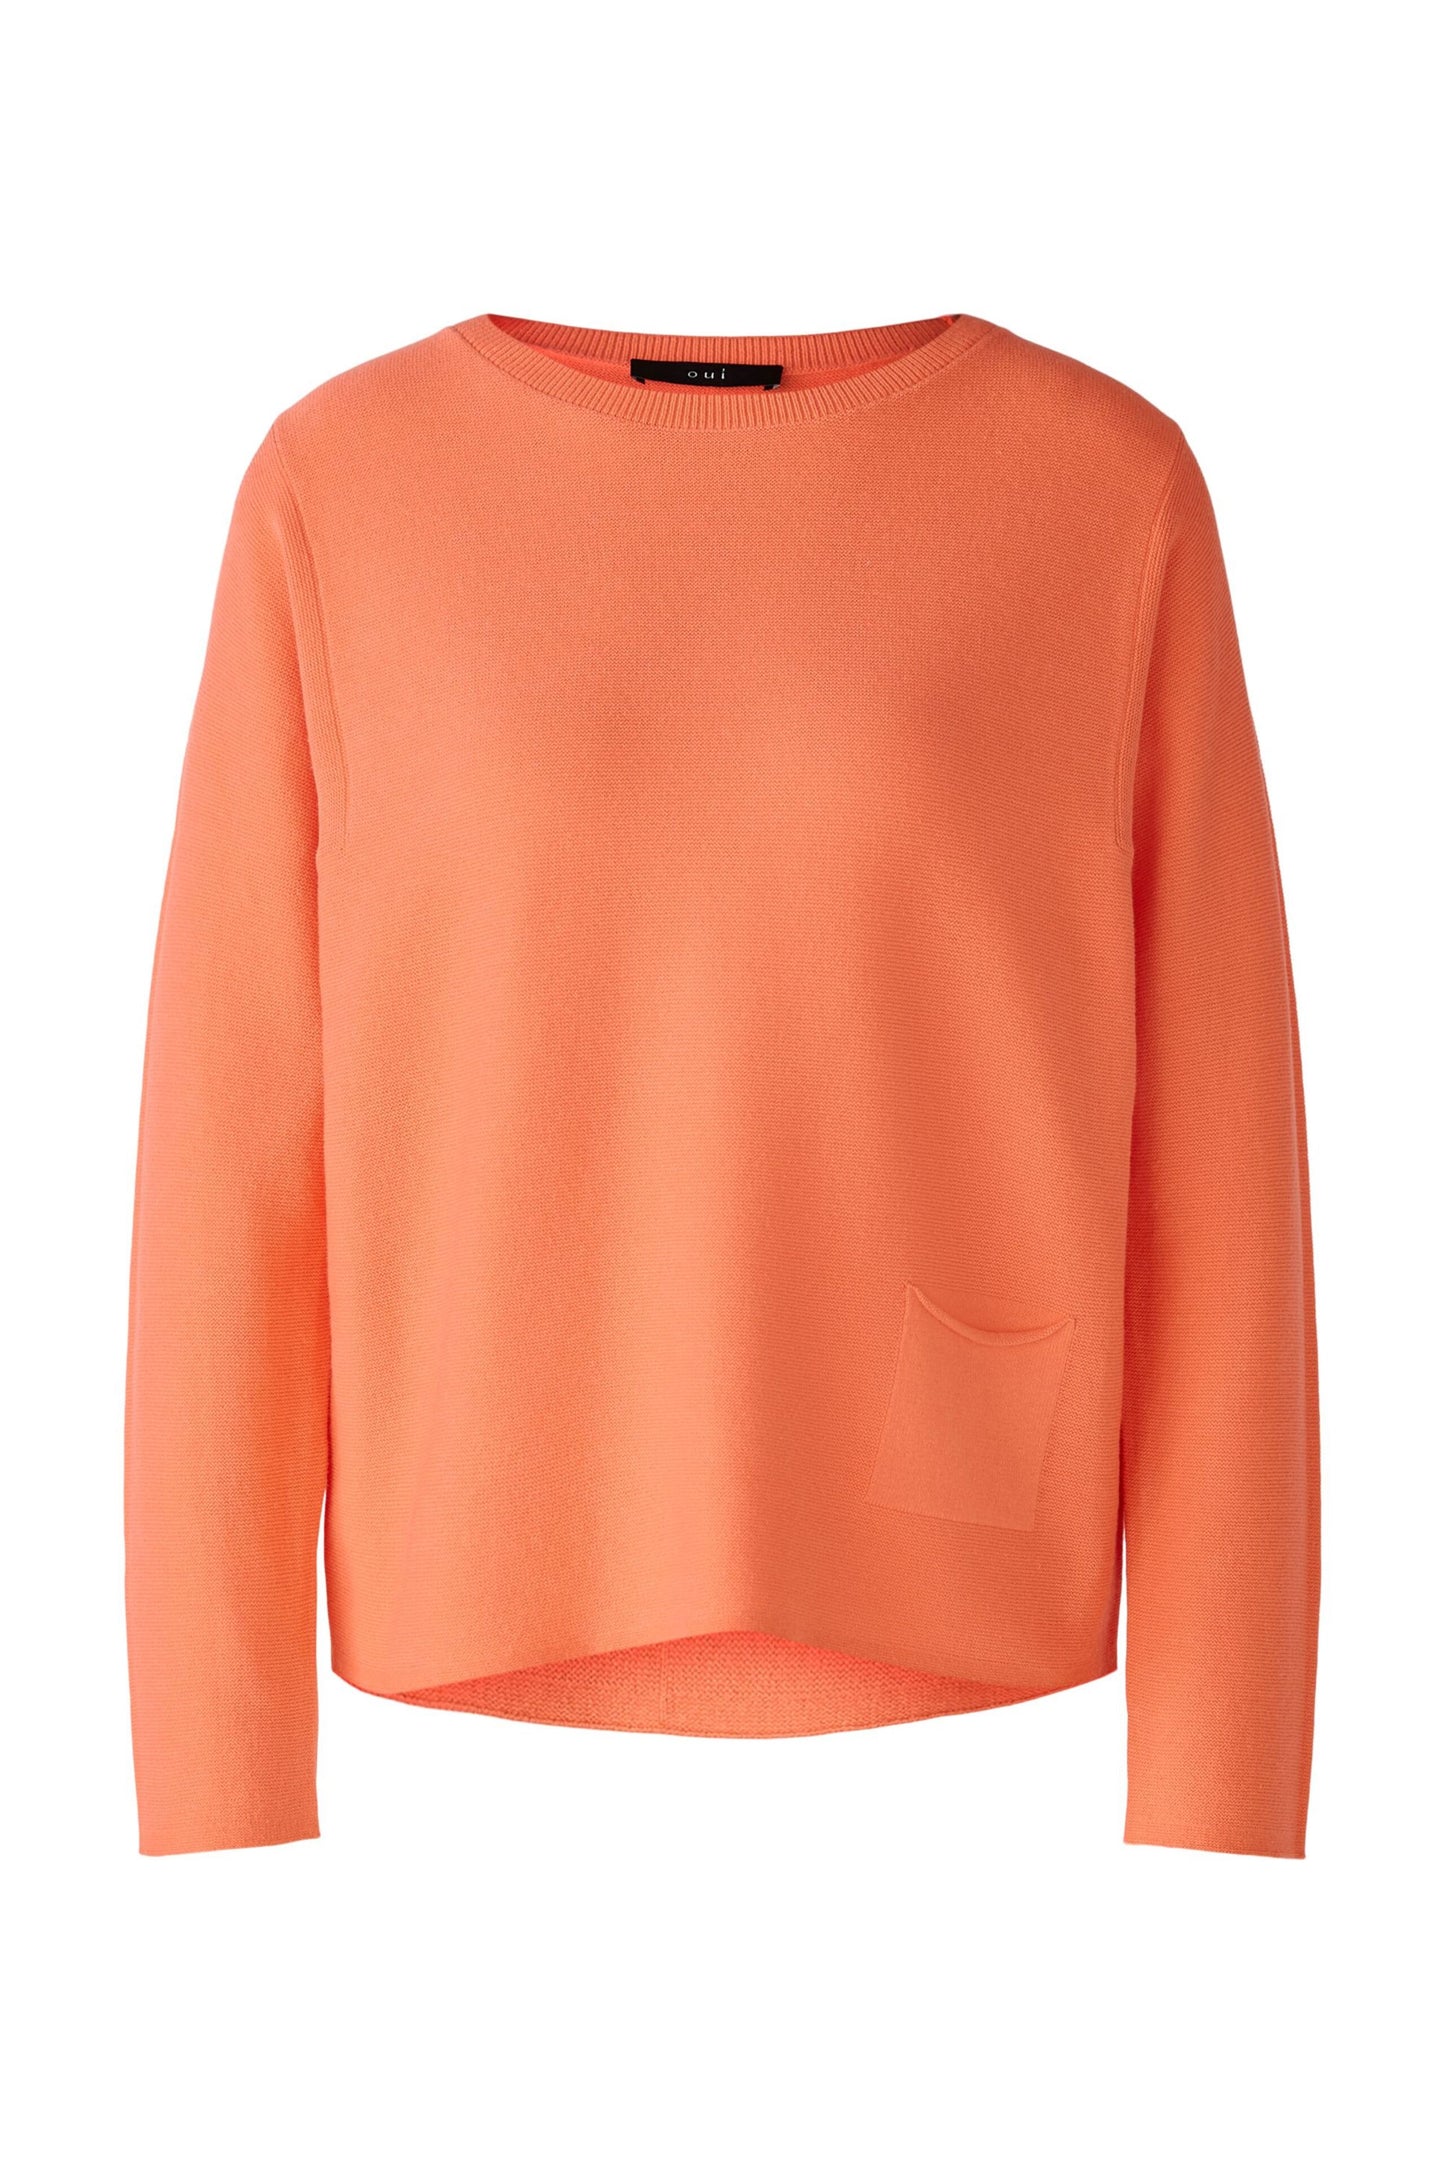 Oui Neon Coral Sweater